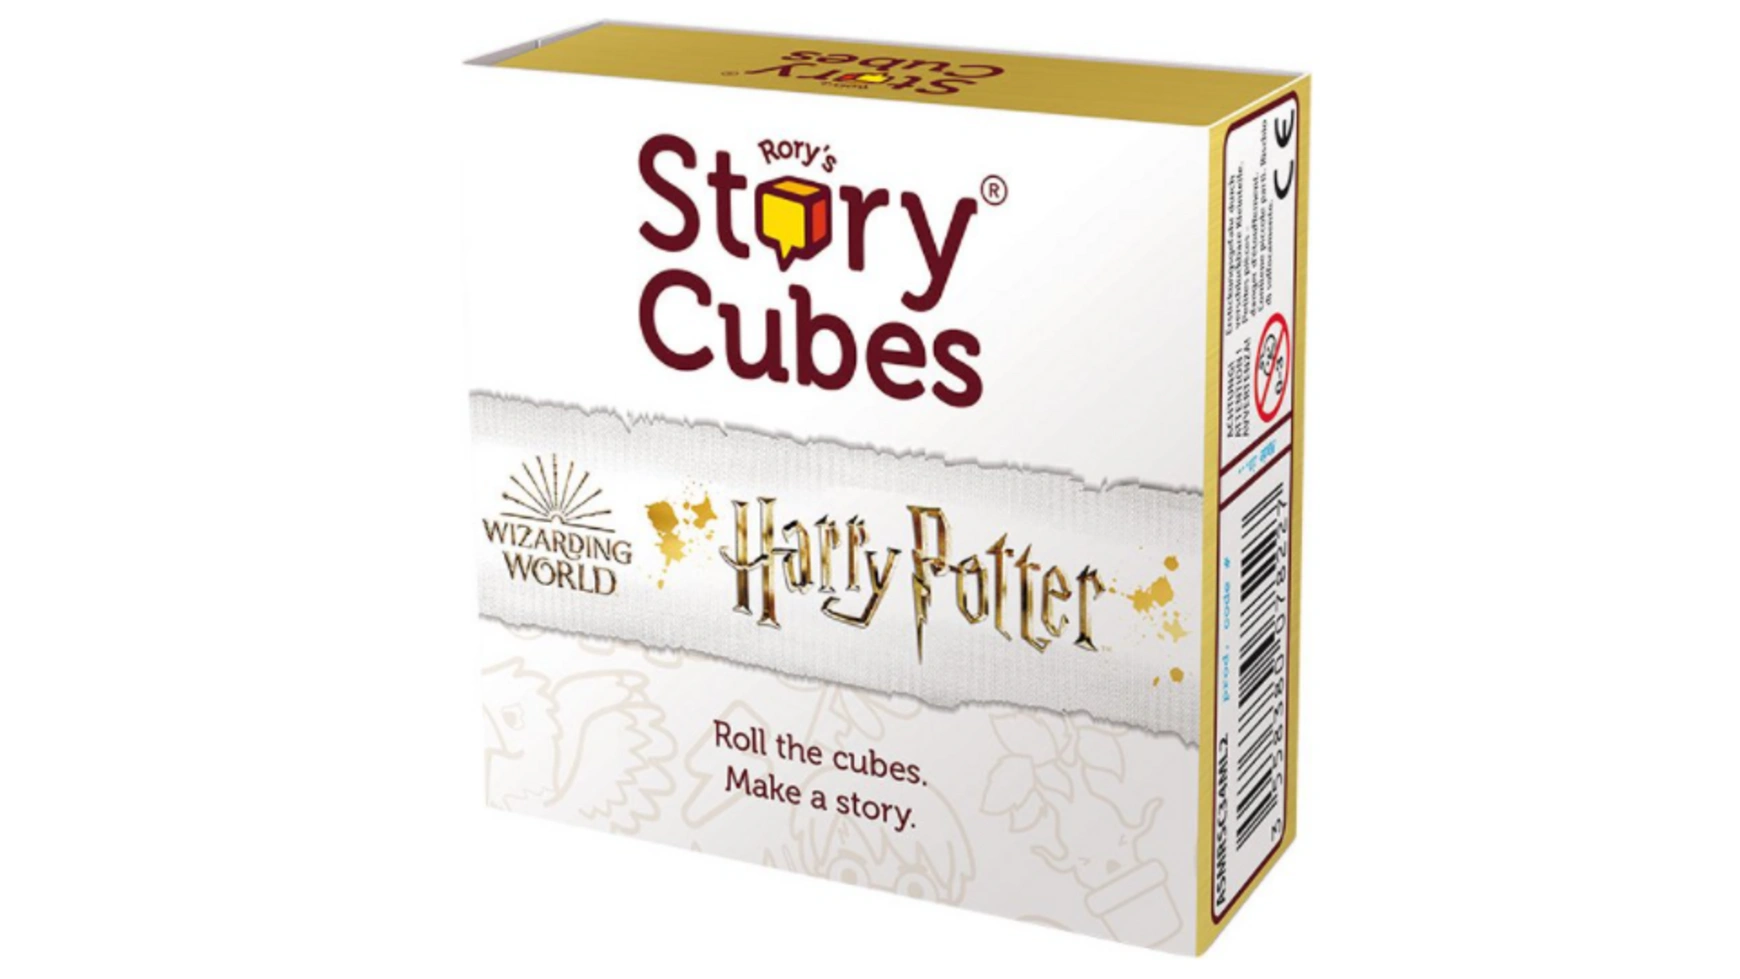 Rorys Story Cubes Кубики историй Рори: Гарри Поттер rubiks кубики историй original